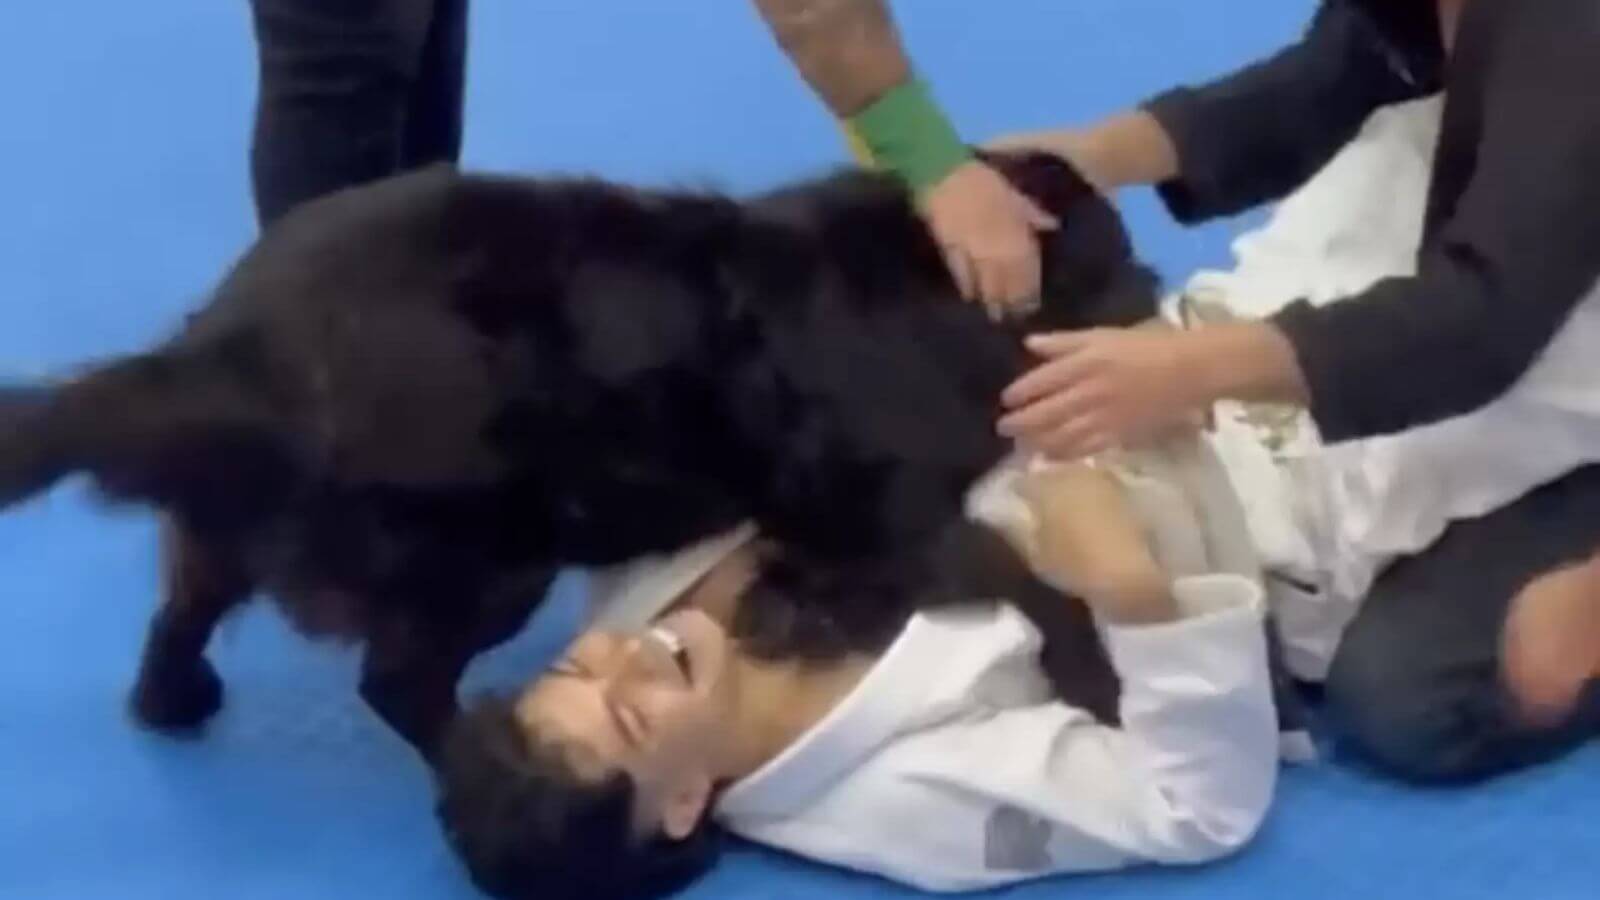 Cachorro interrompe luta de jiujitsu